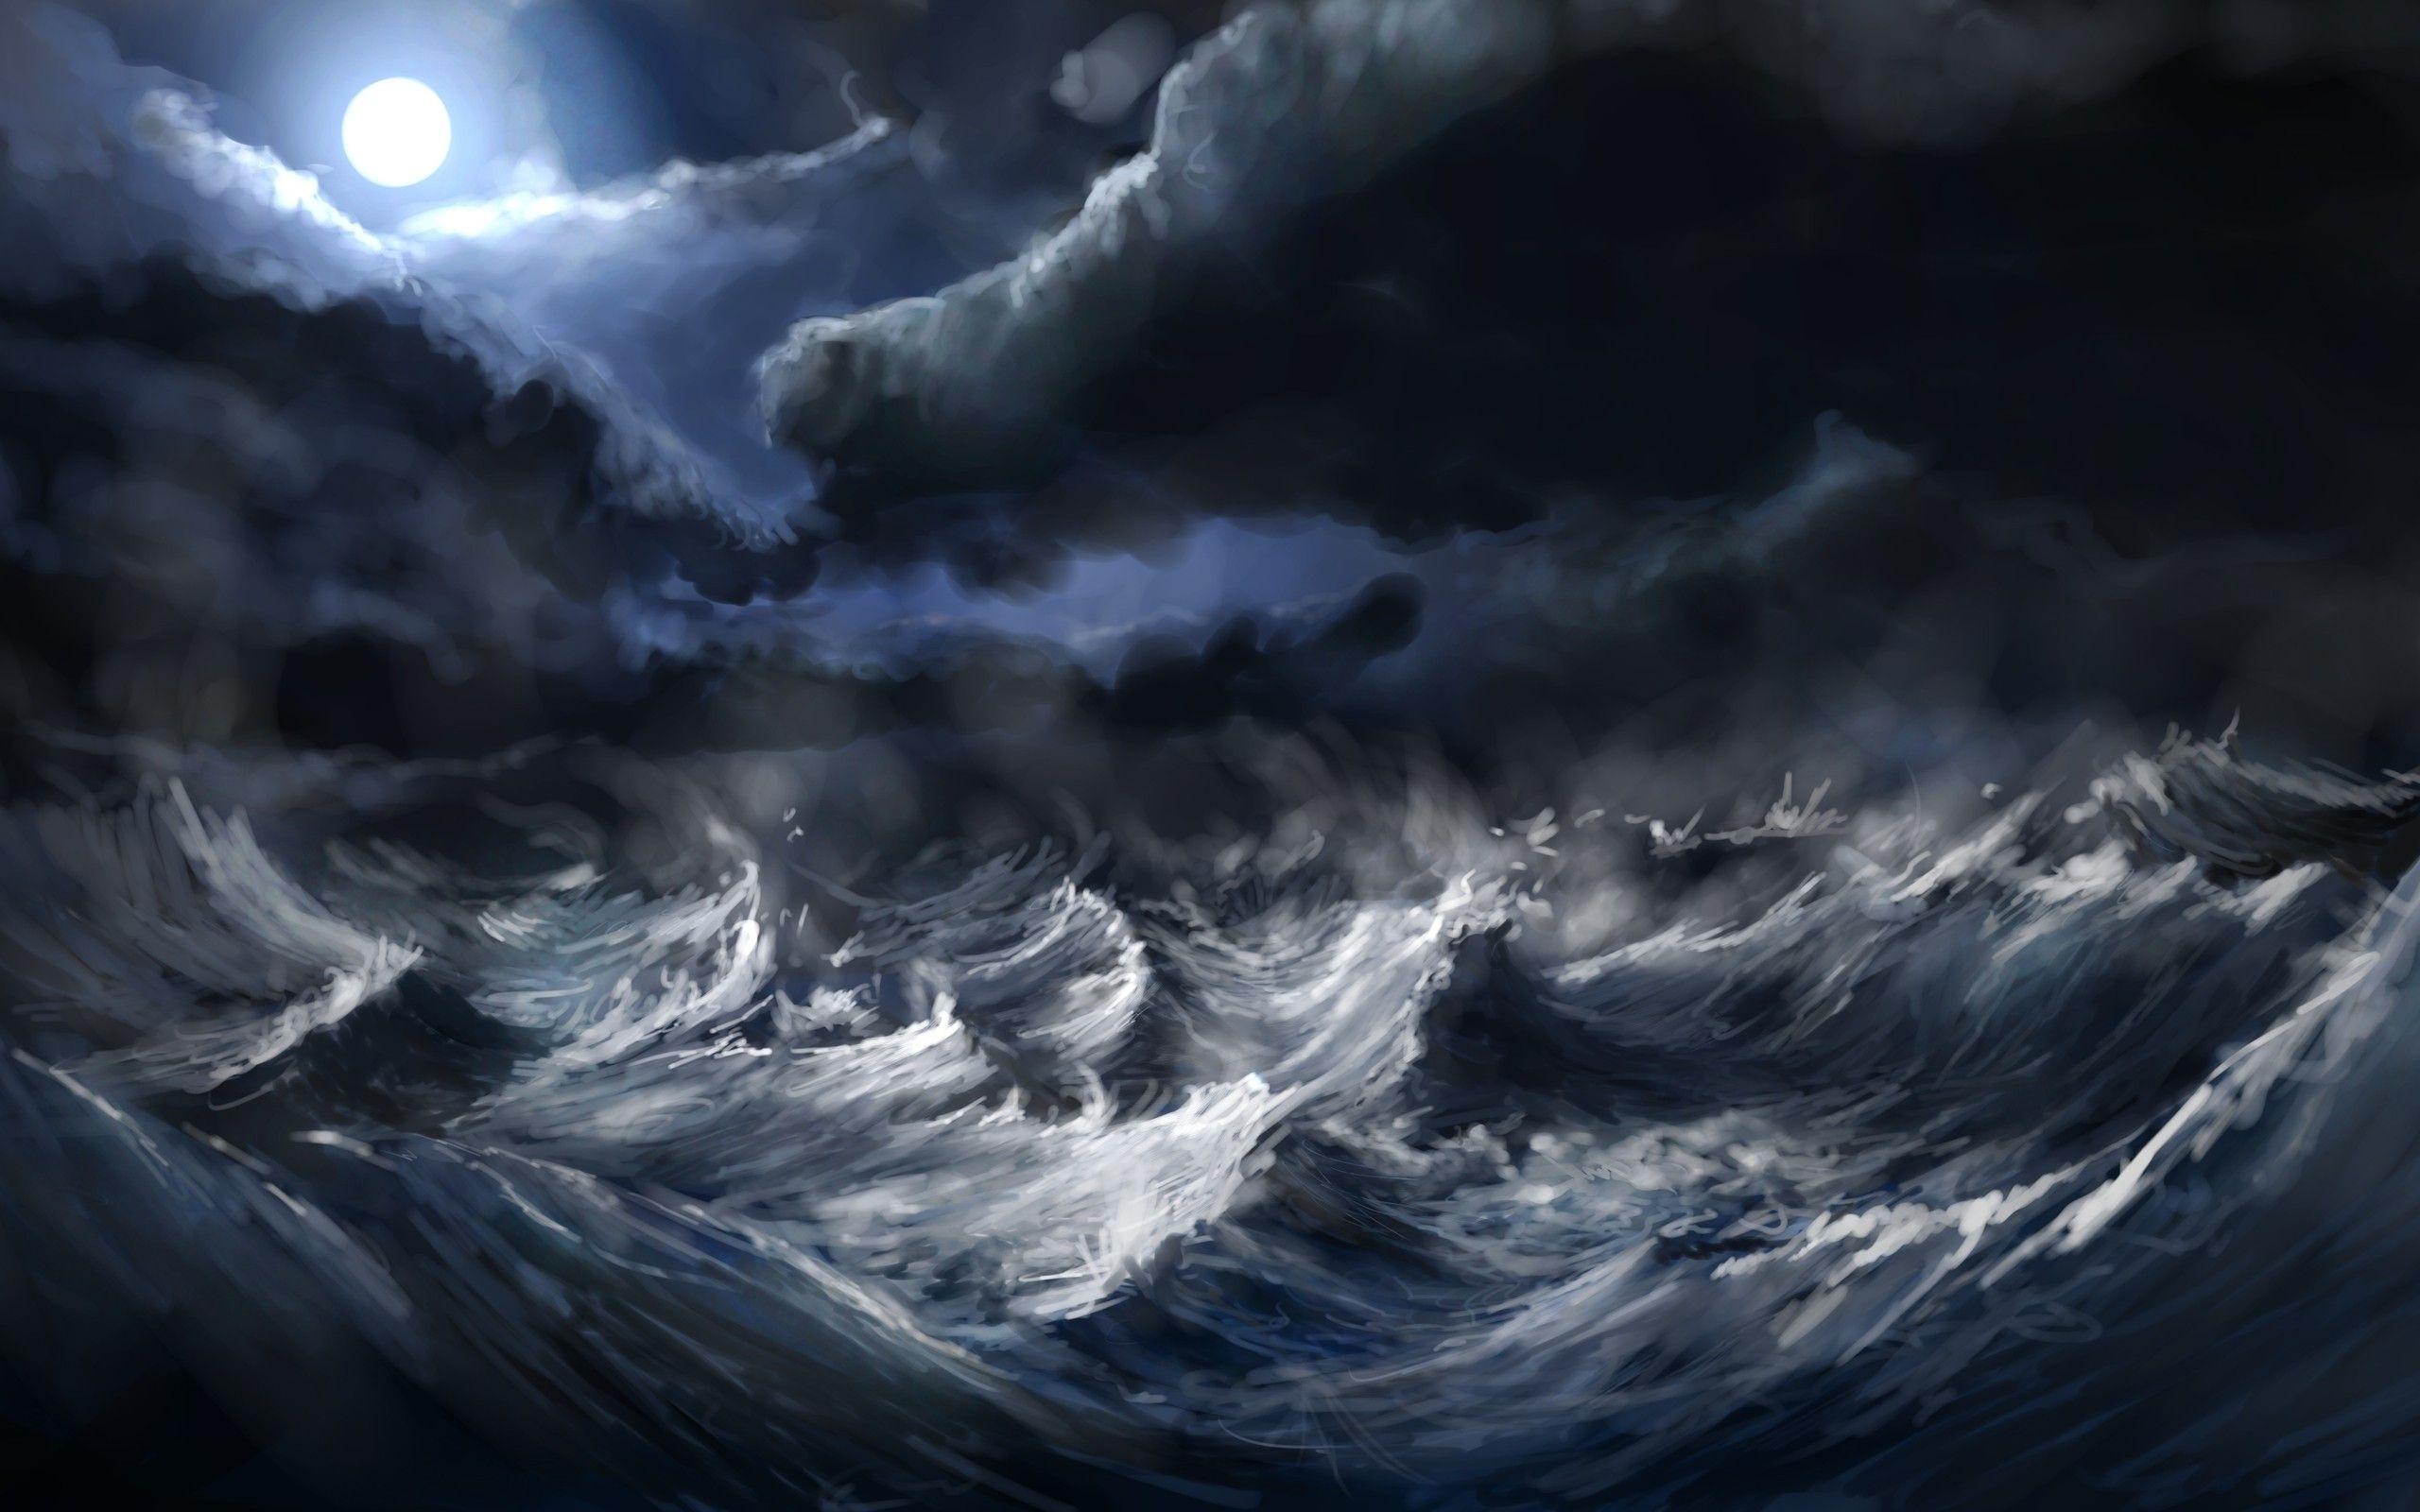 New Dark Ocean Storm Wallpaper Free To Download Wallpaper